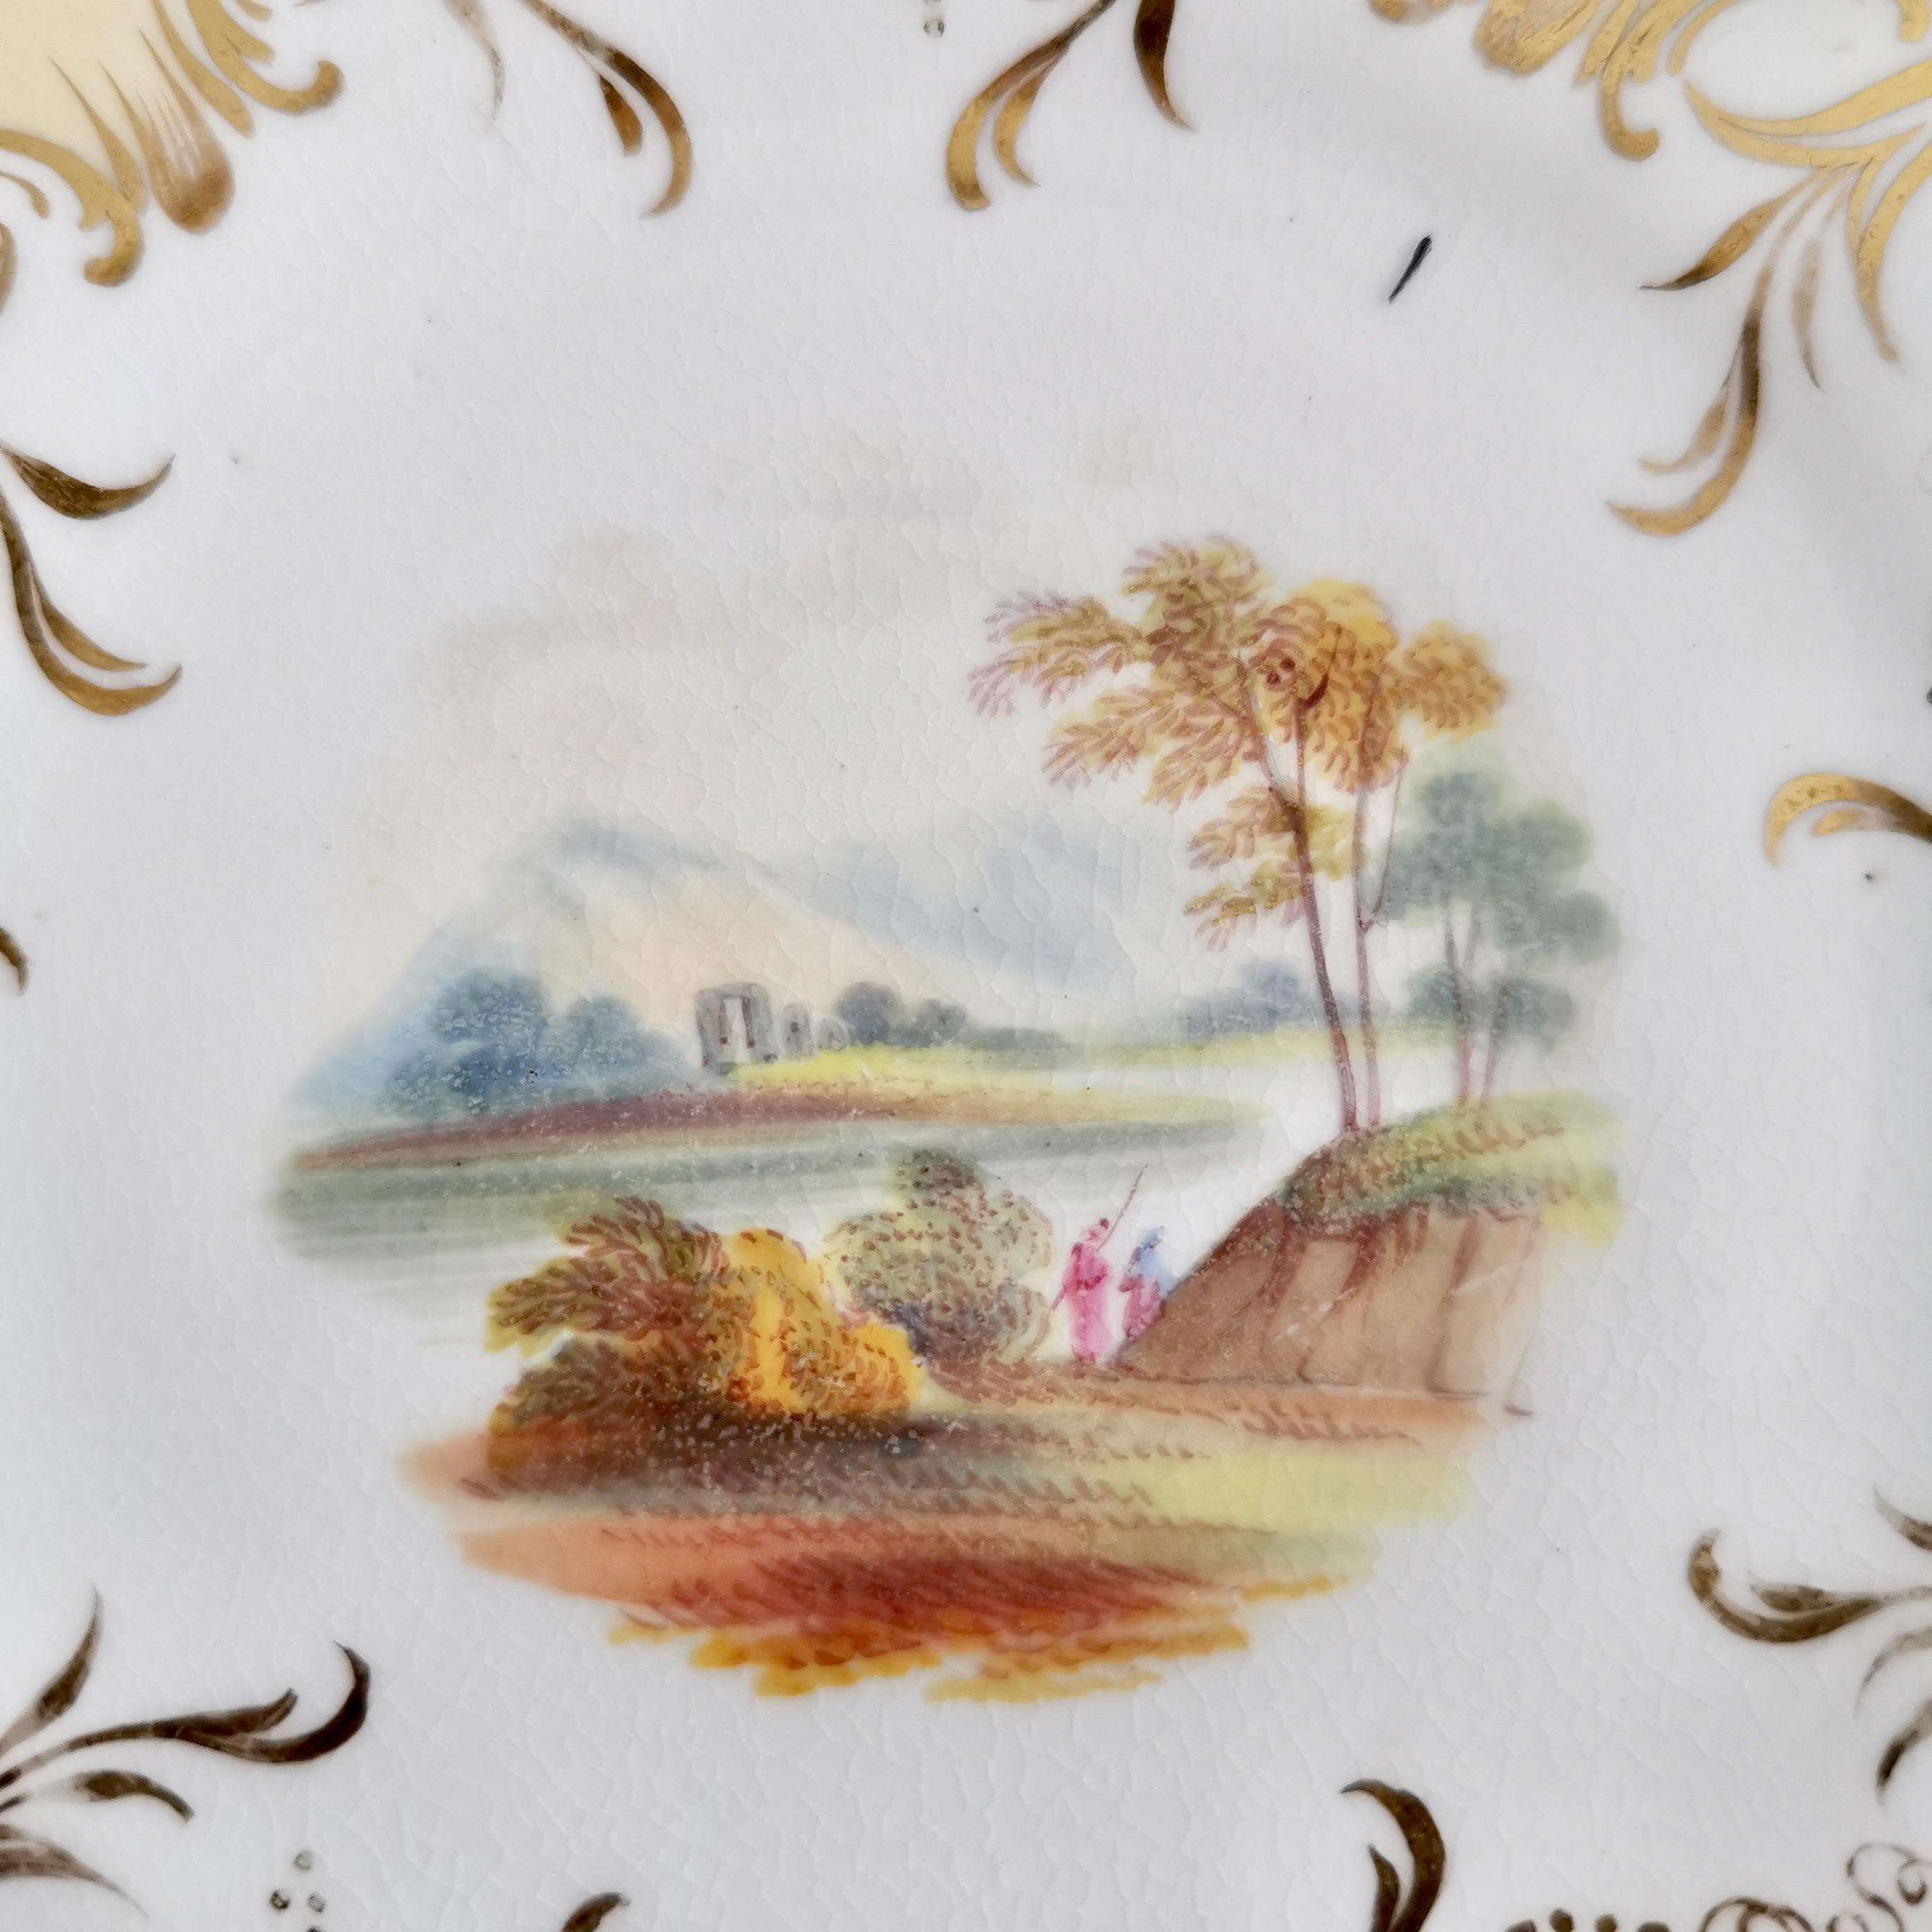 Coalport-Porzellan-Teekanne, Beige mit Landschaften, Rokoko-Revival, ca. 1840 (Mittleres 19. Jahrhundert) im Angebot